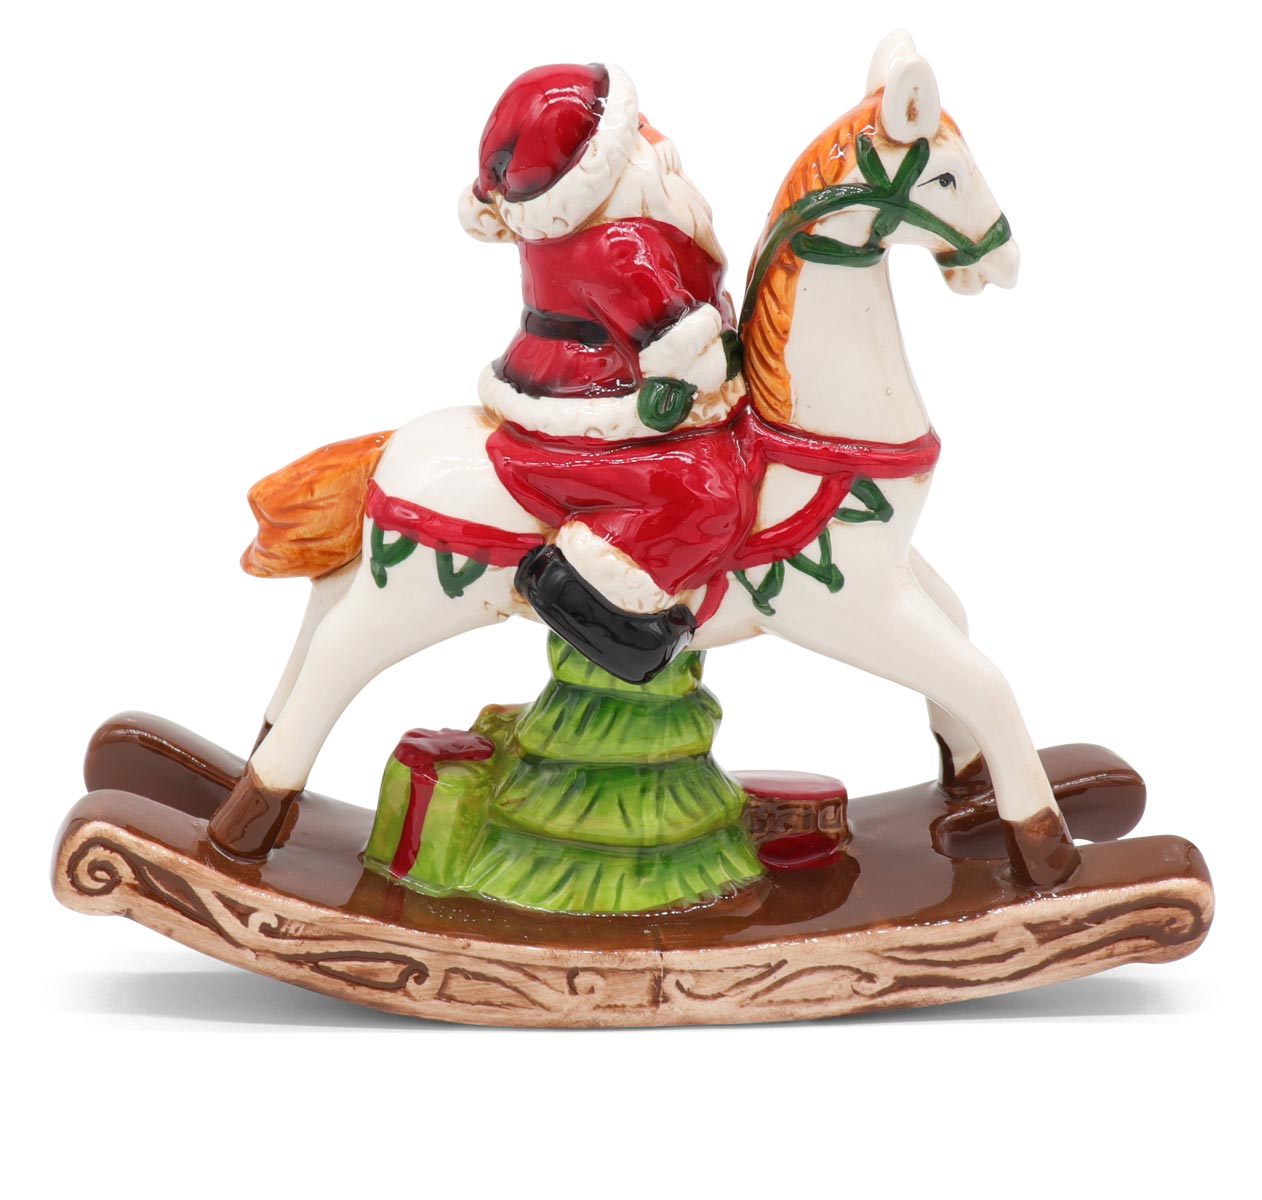 Rocking horse with Santa Claus, 